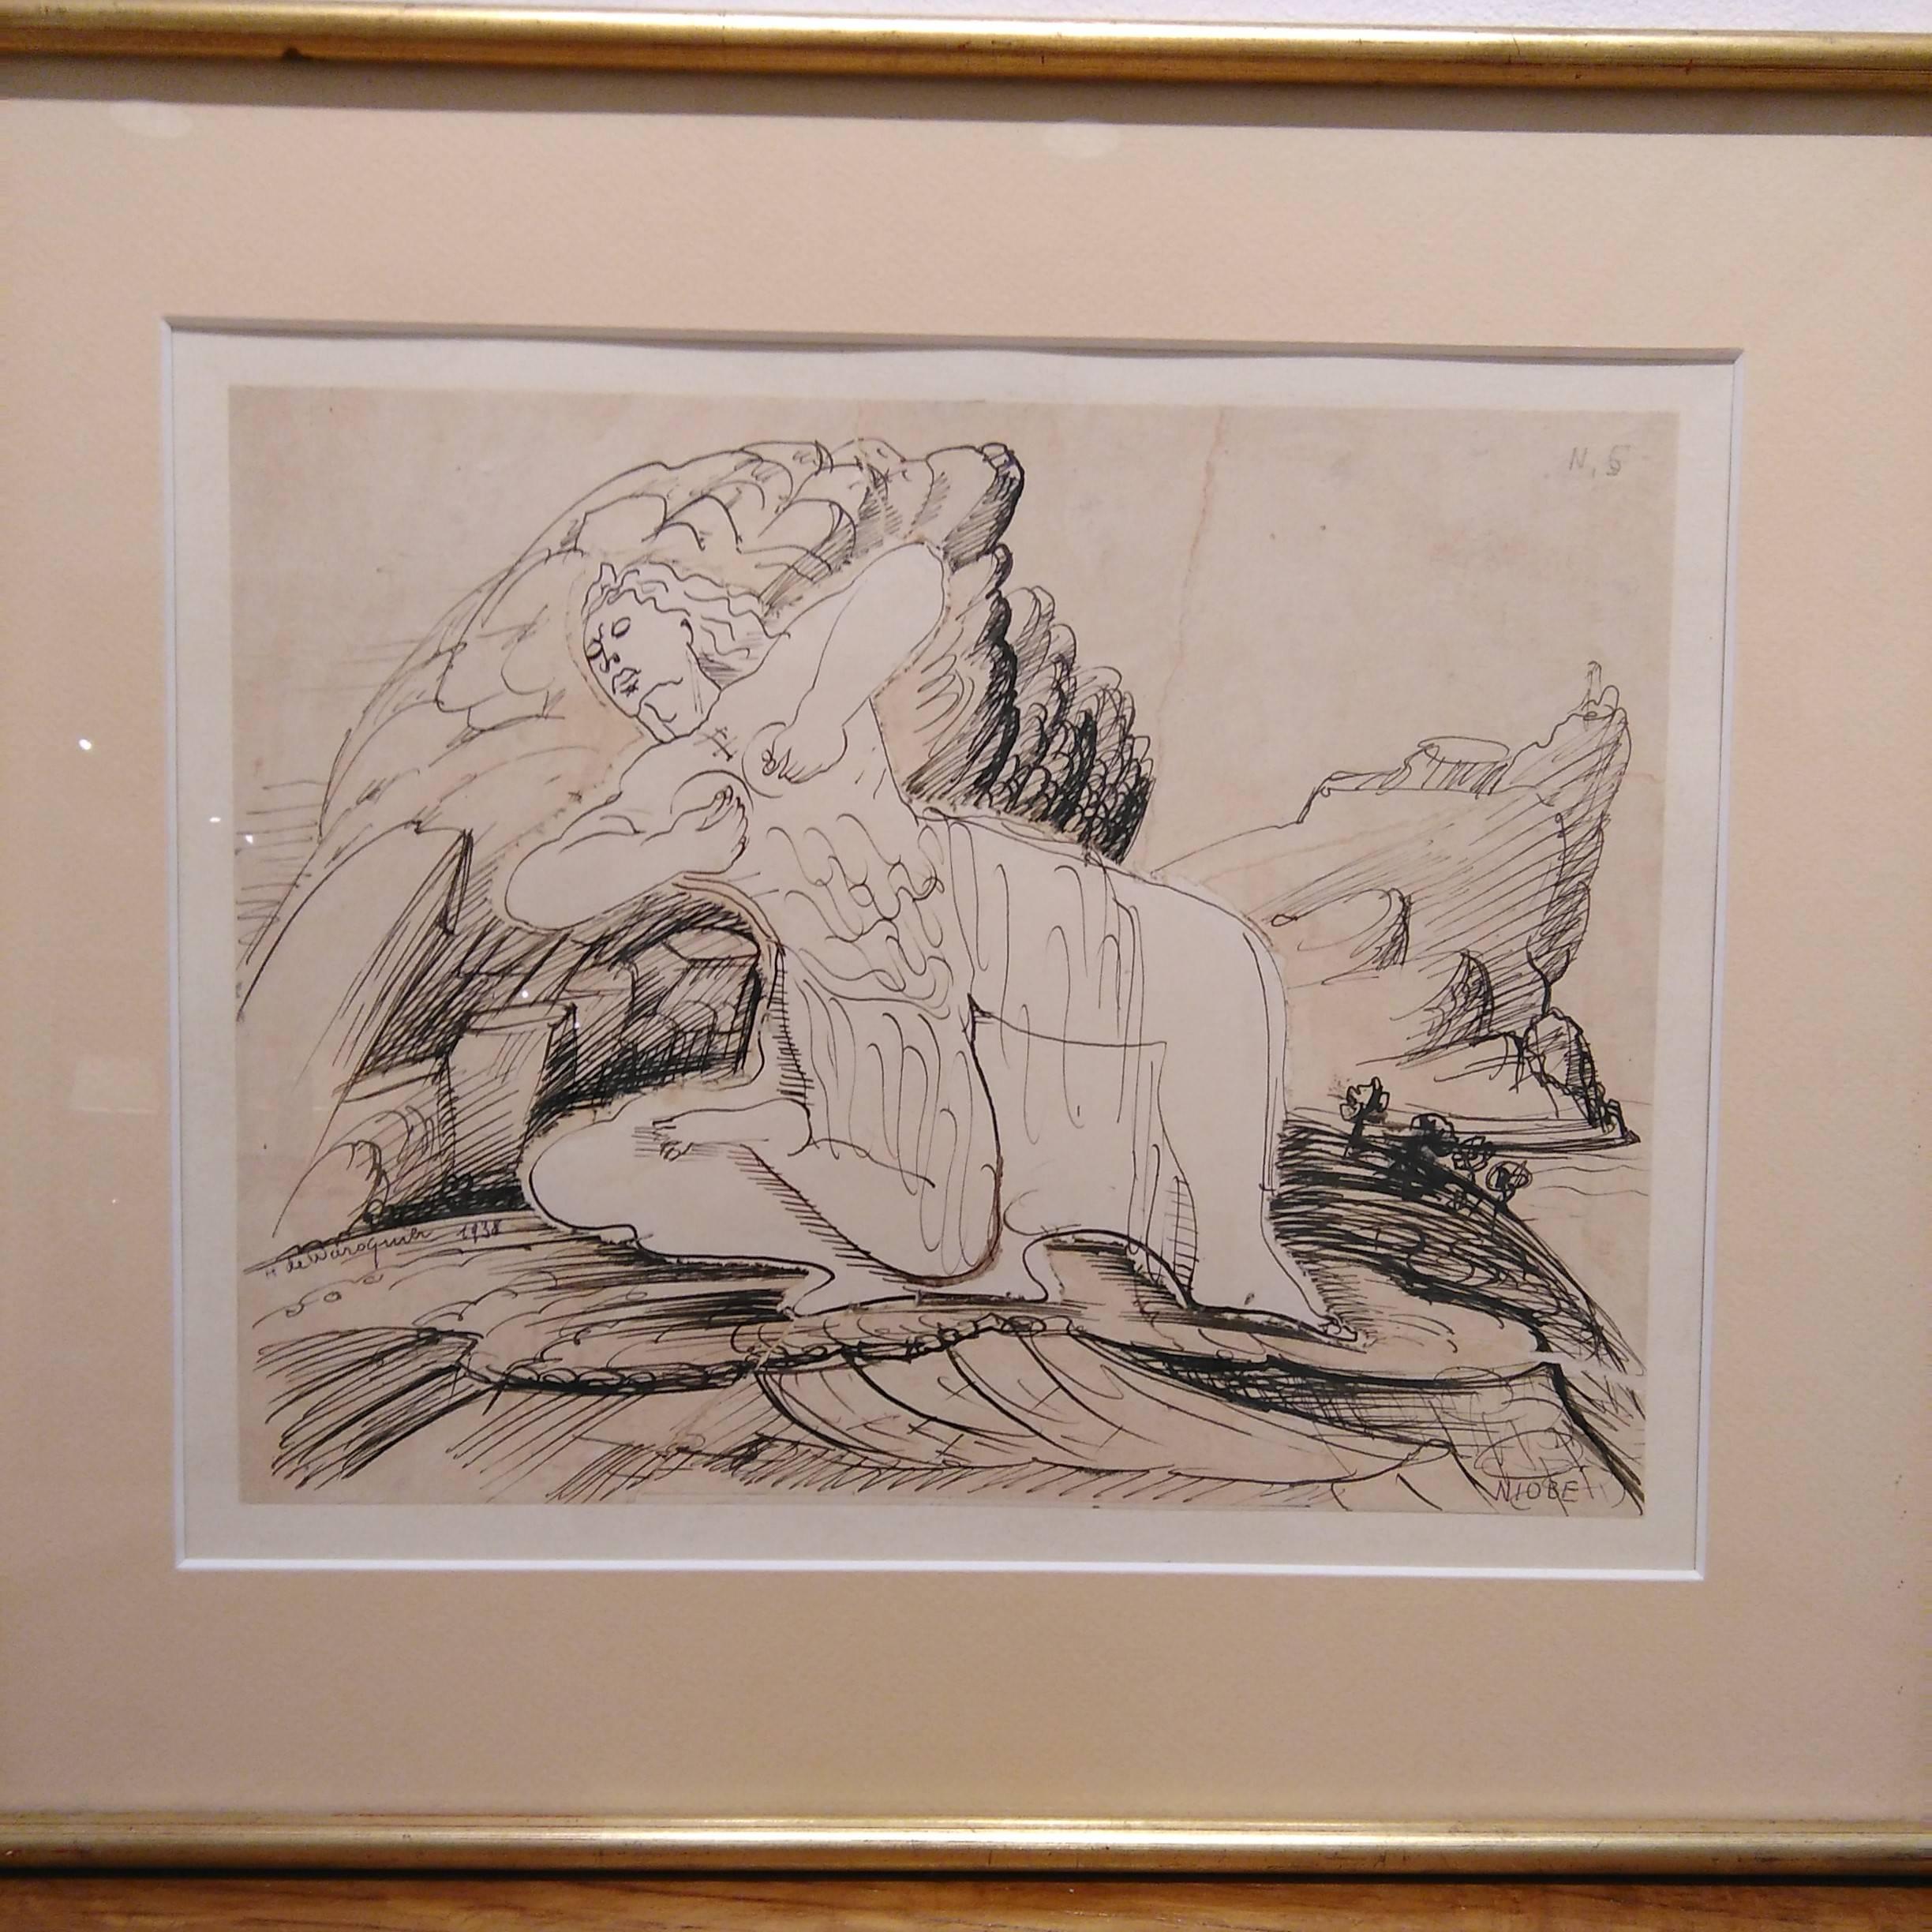 Niobe Greek mythology theme
signed,
1938
framed (1 chip off on frame finish).